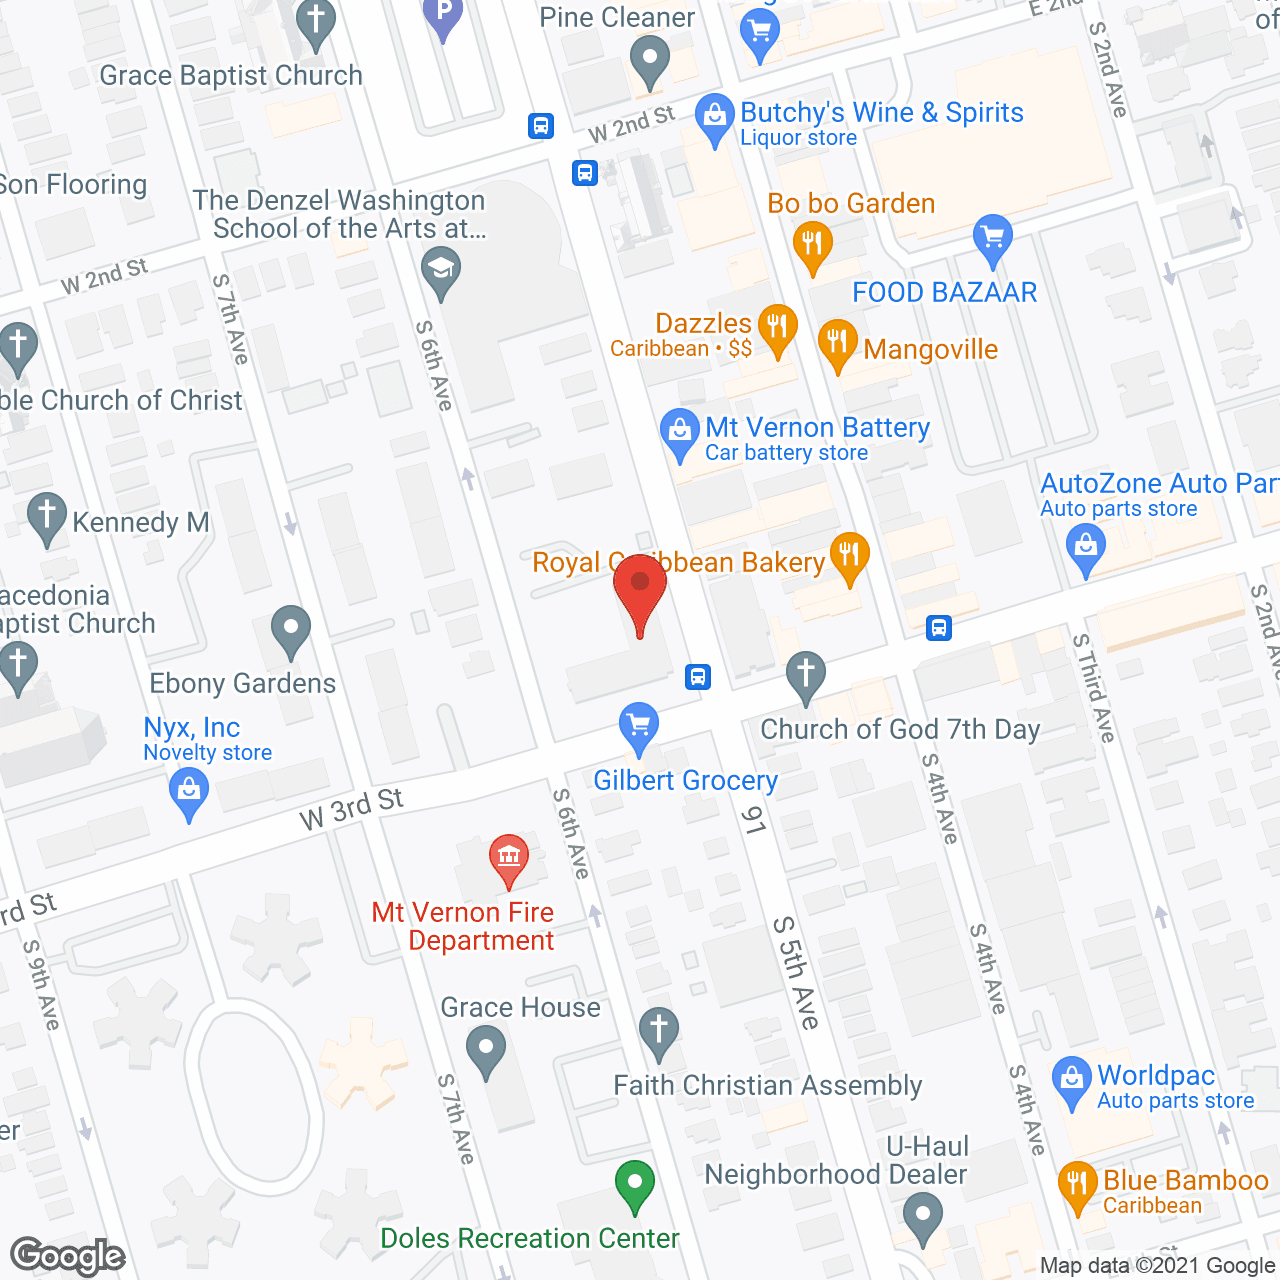 Macedonia Towers in google map